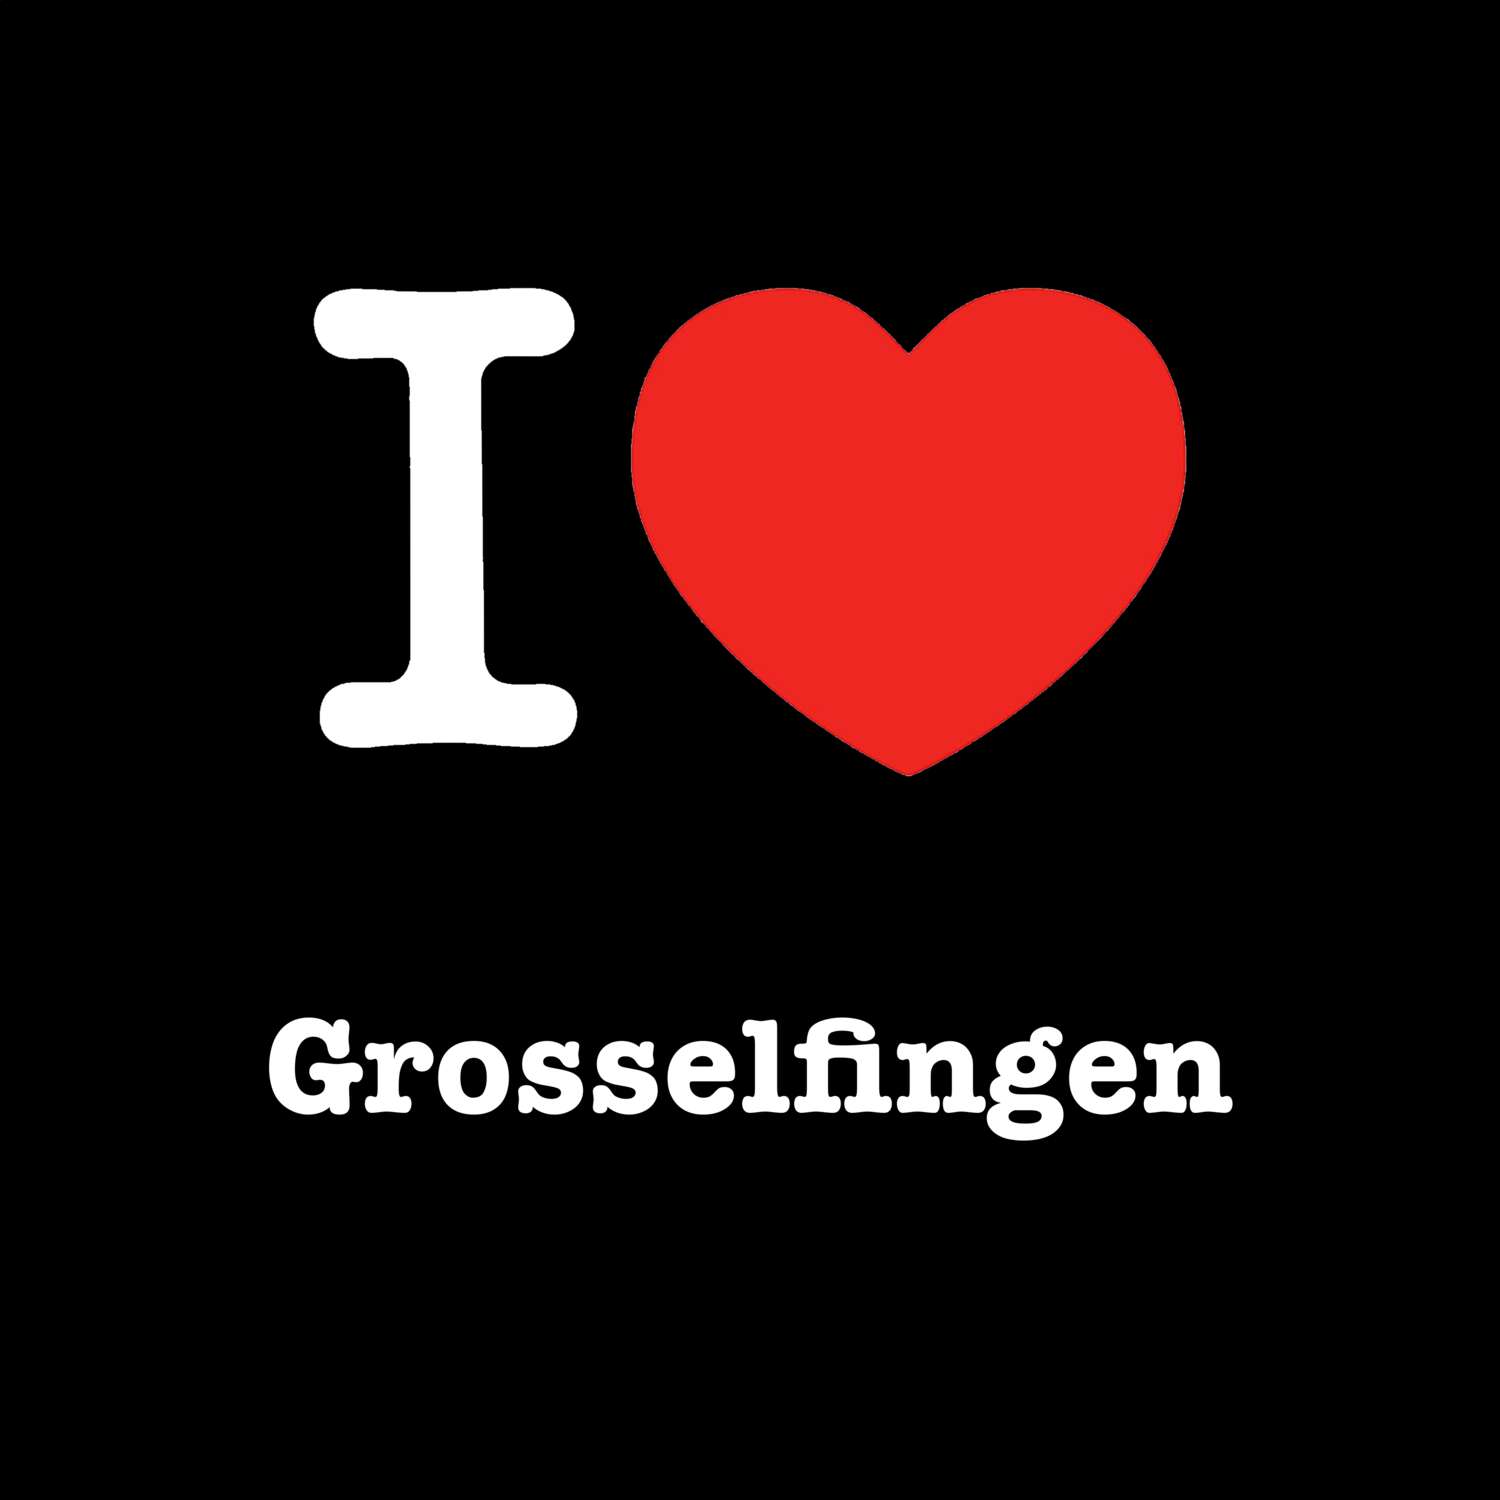 Grosselfingen T-Shirt »I love«